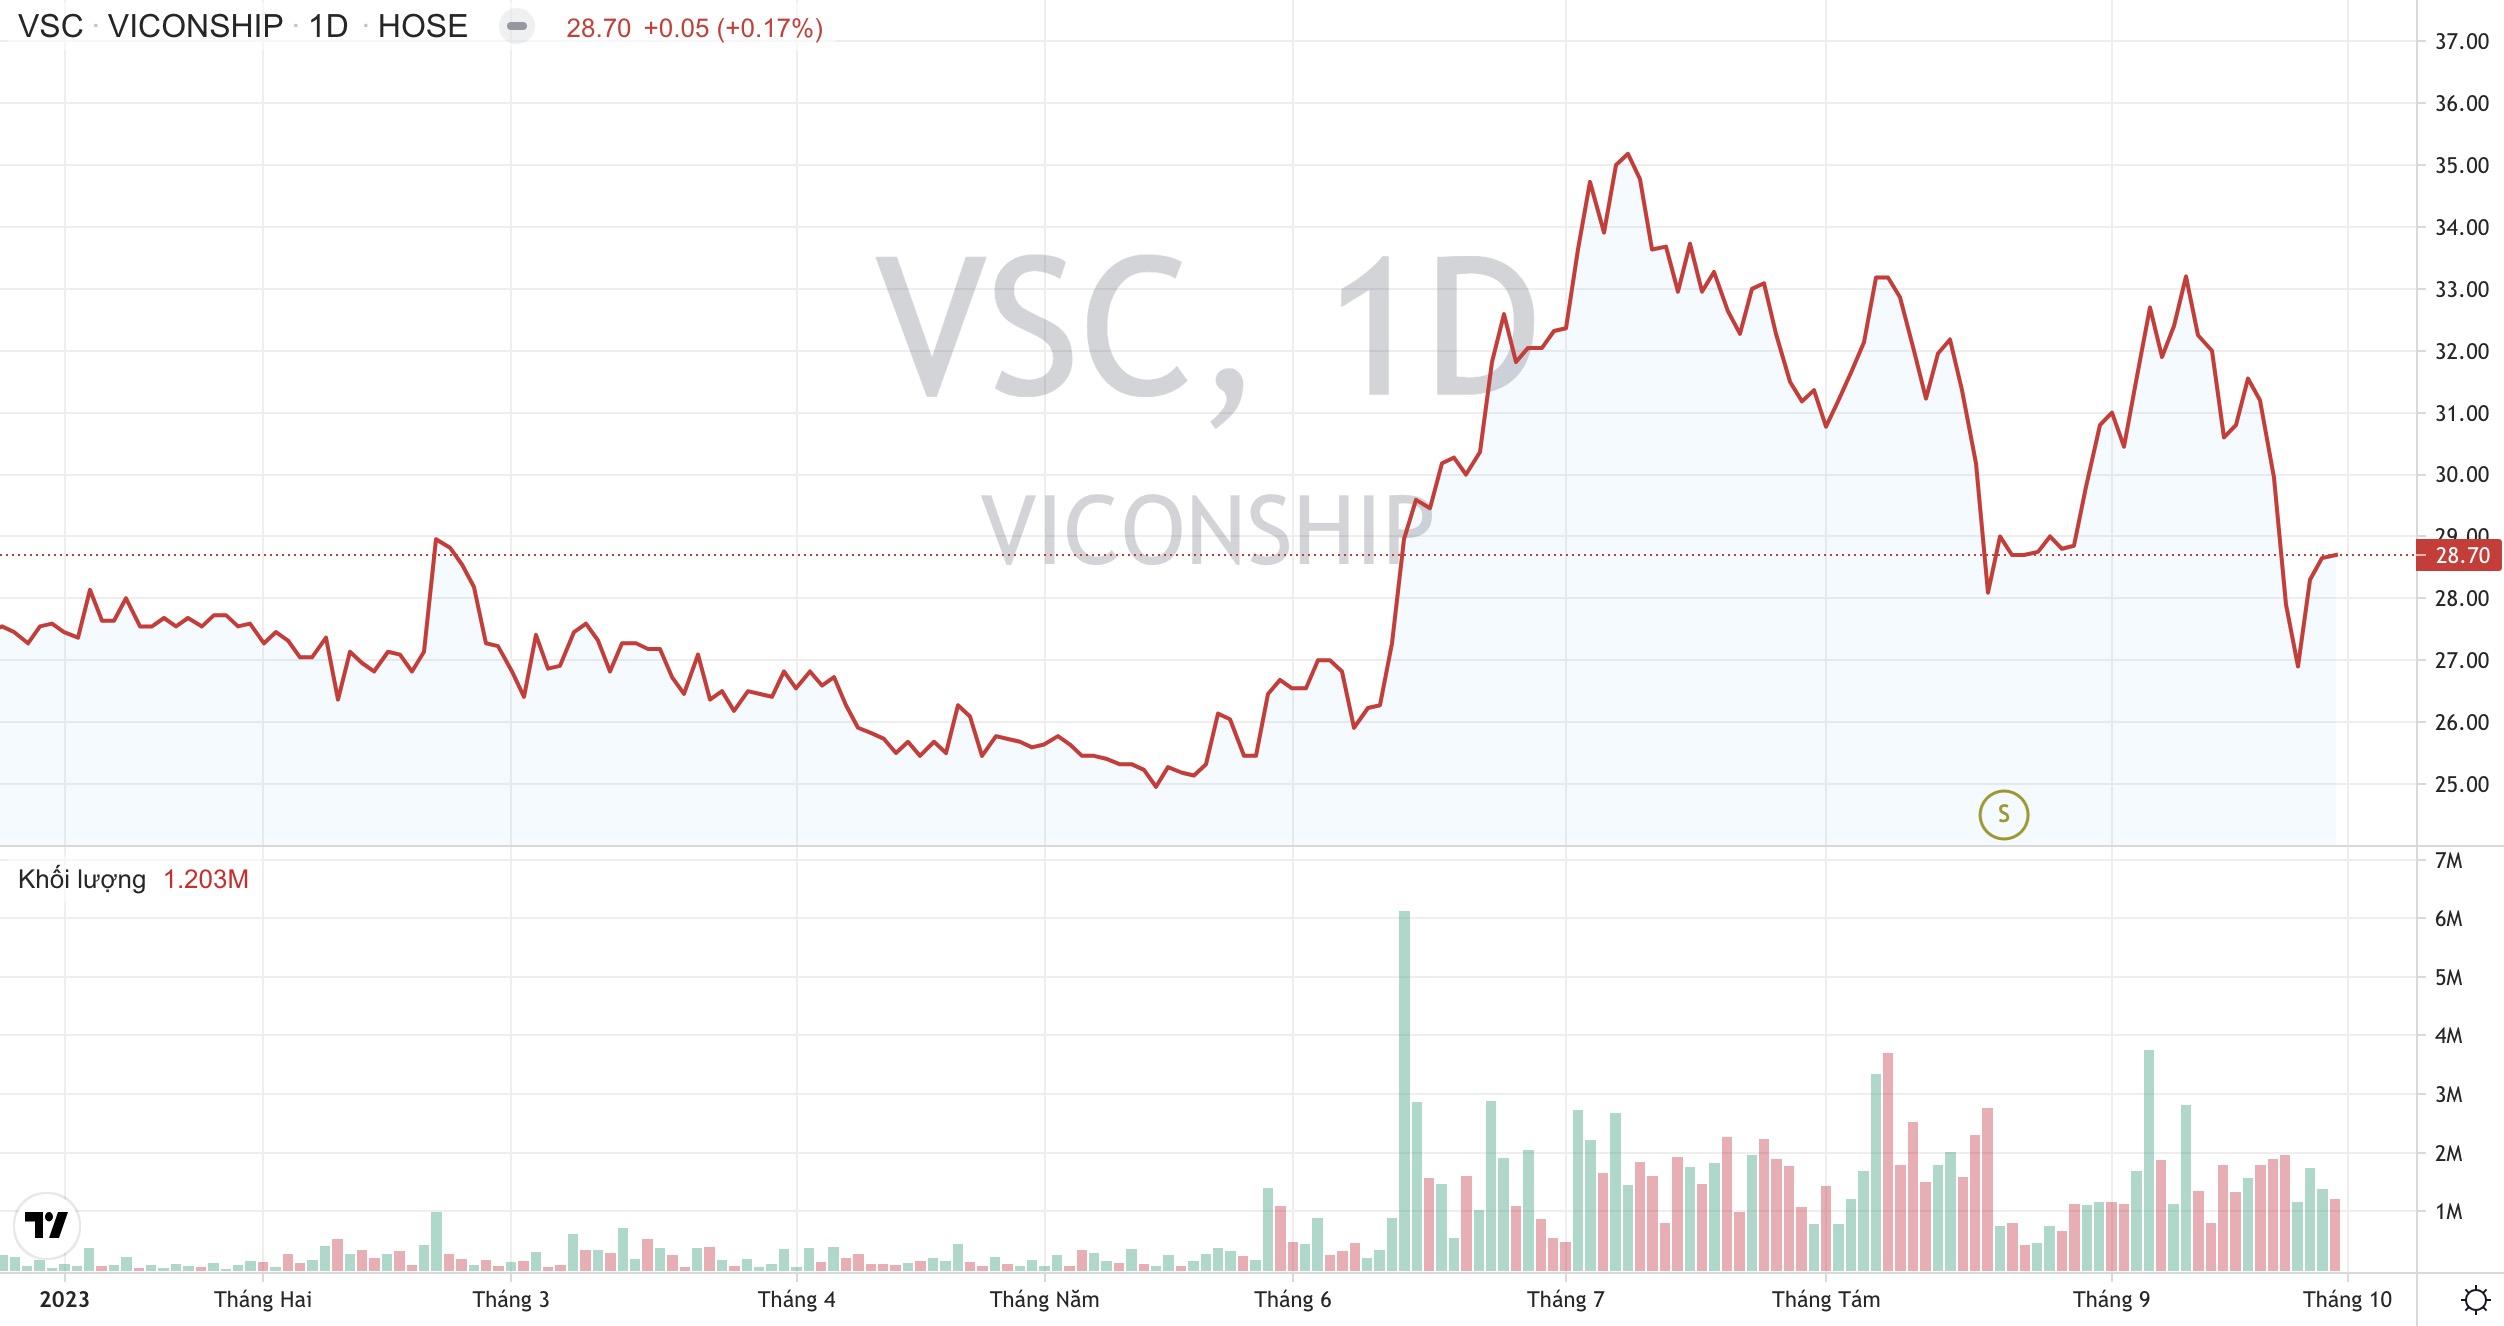 Giá cổ phiếu VSC Container Việt Nam